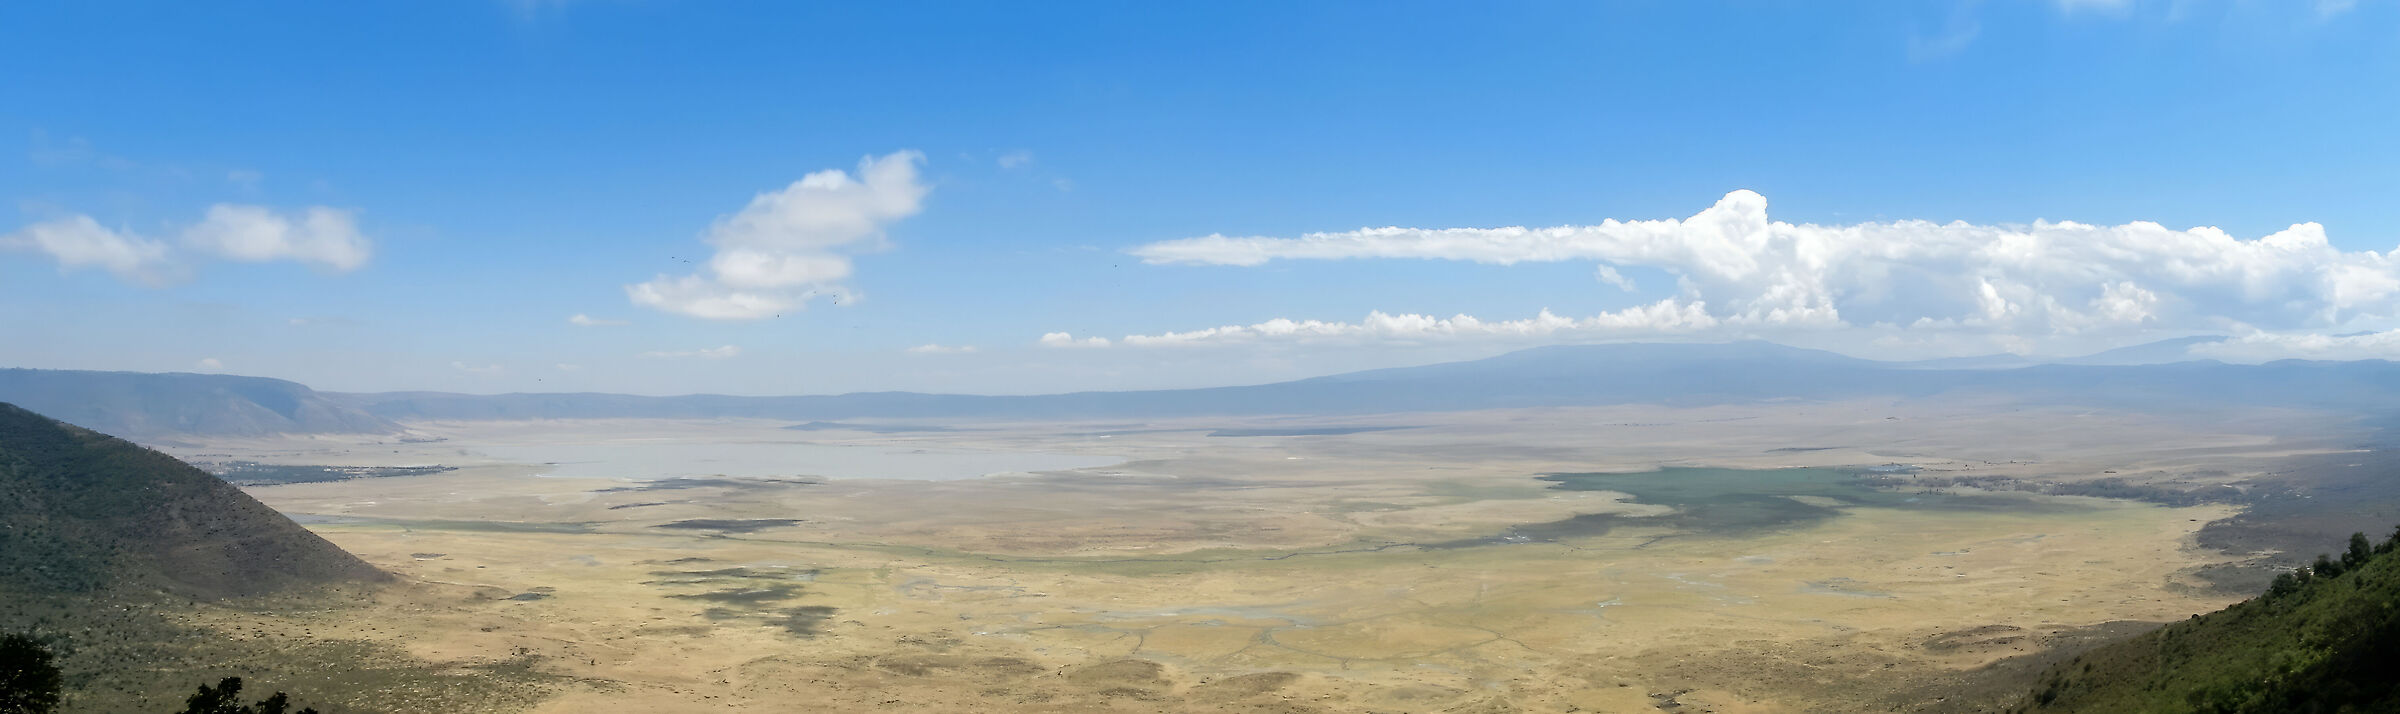 Ngorongoro Crater...